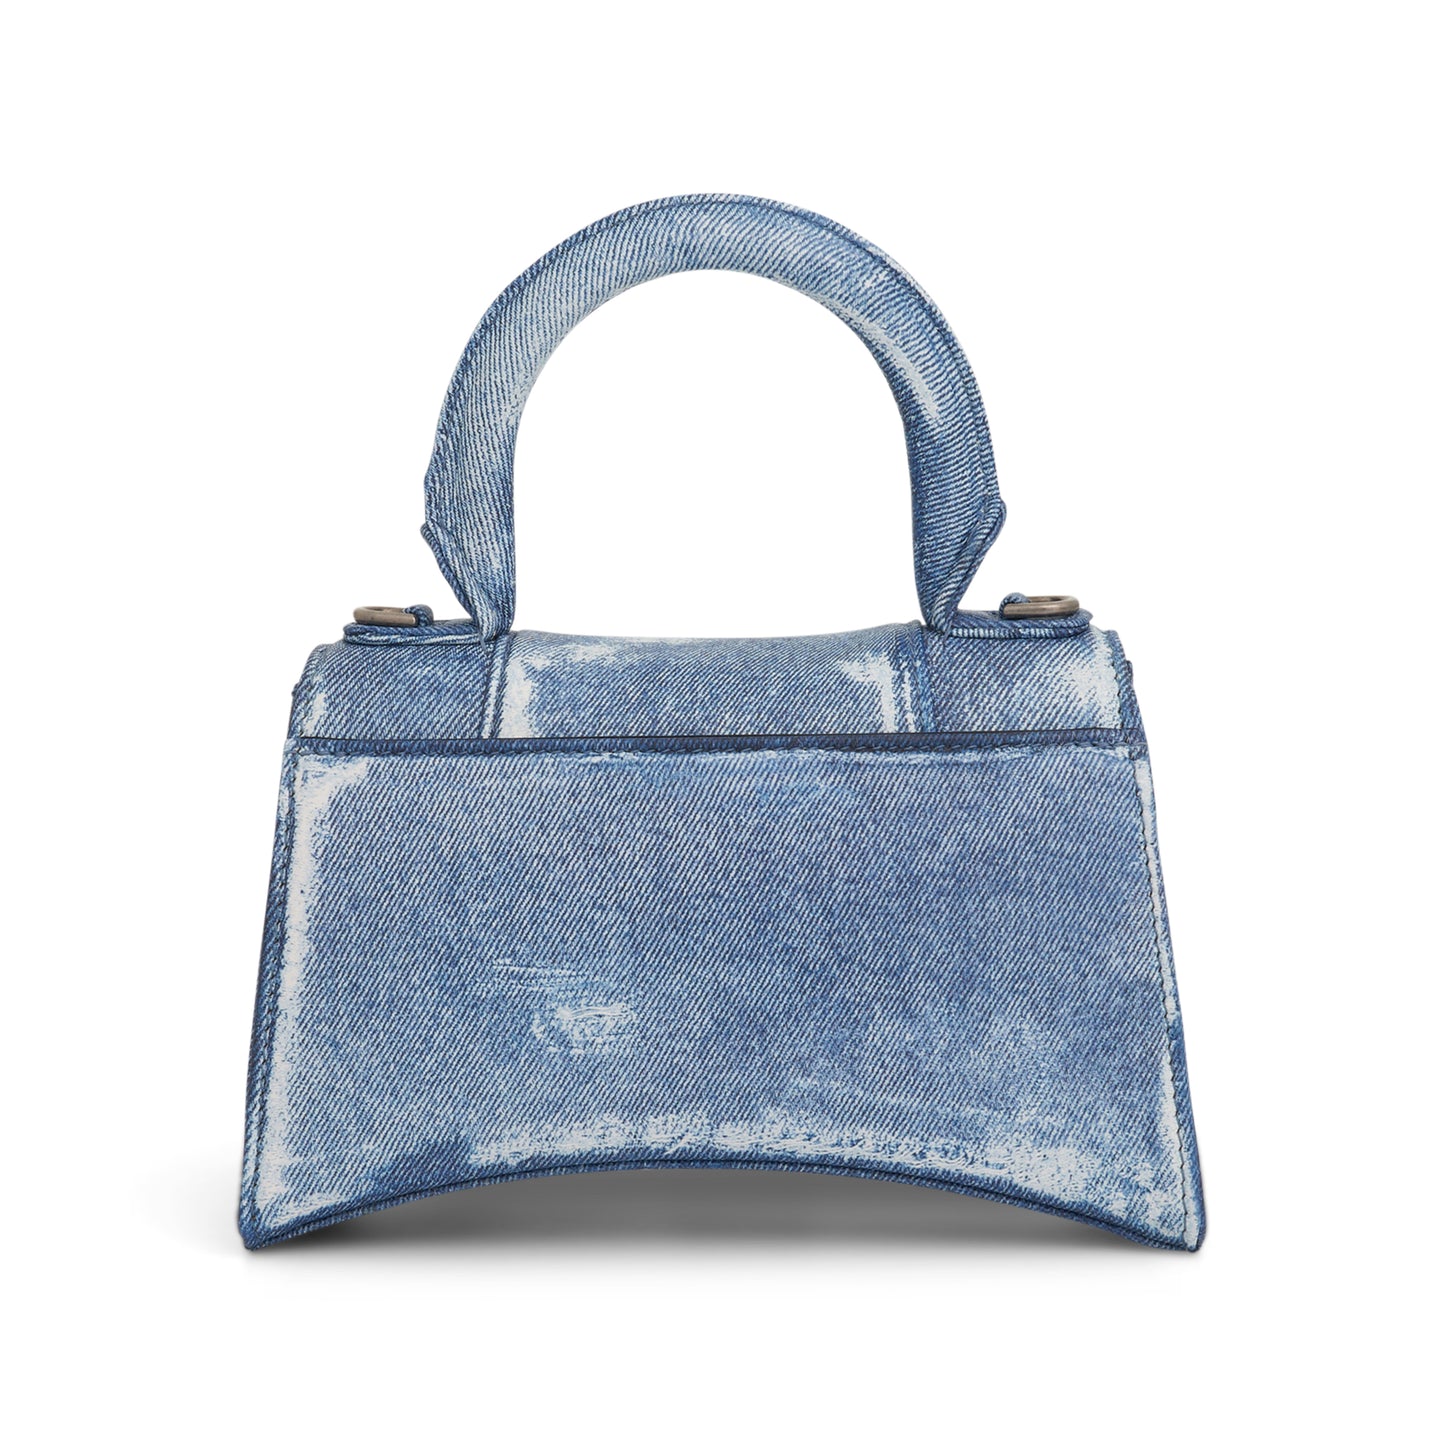 Hourglass XS Handbag in Denim Printed in Blue